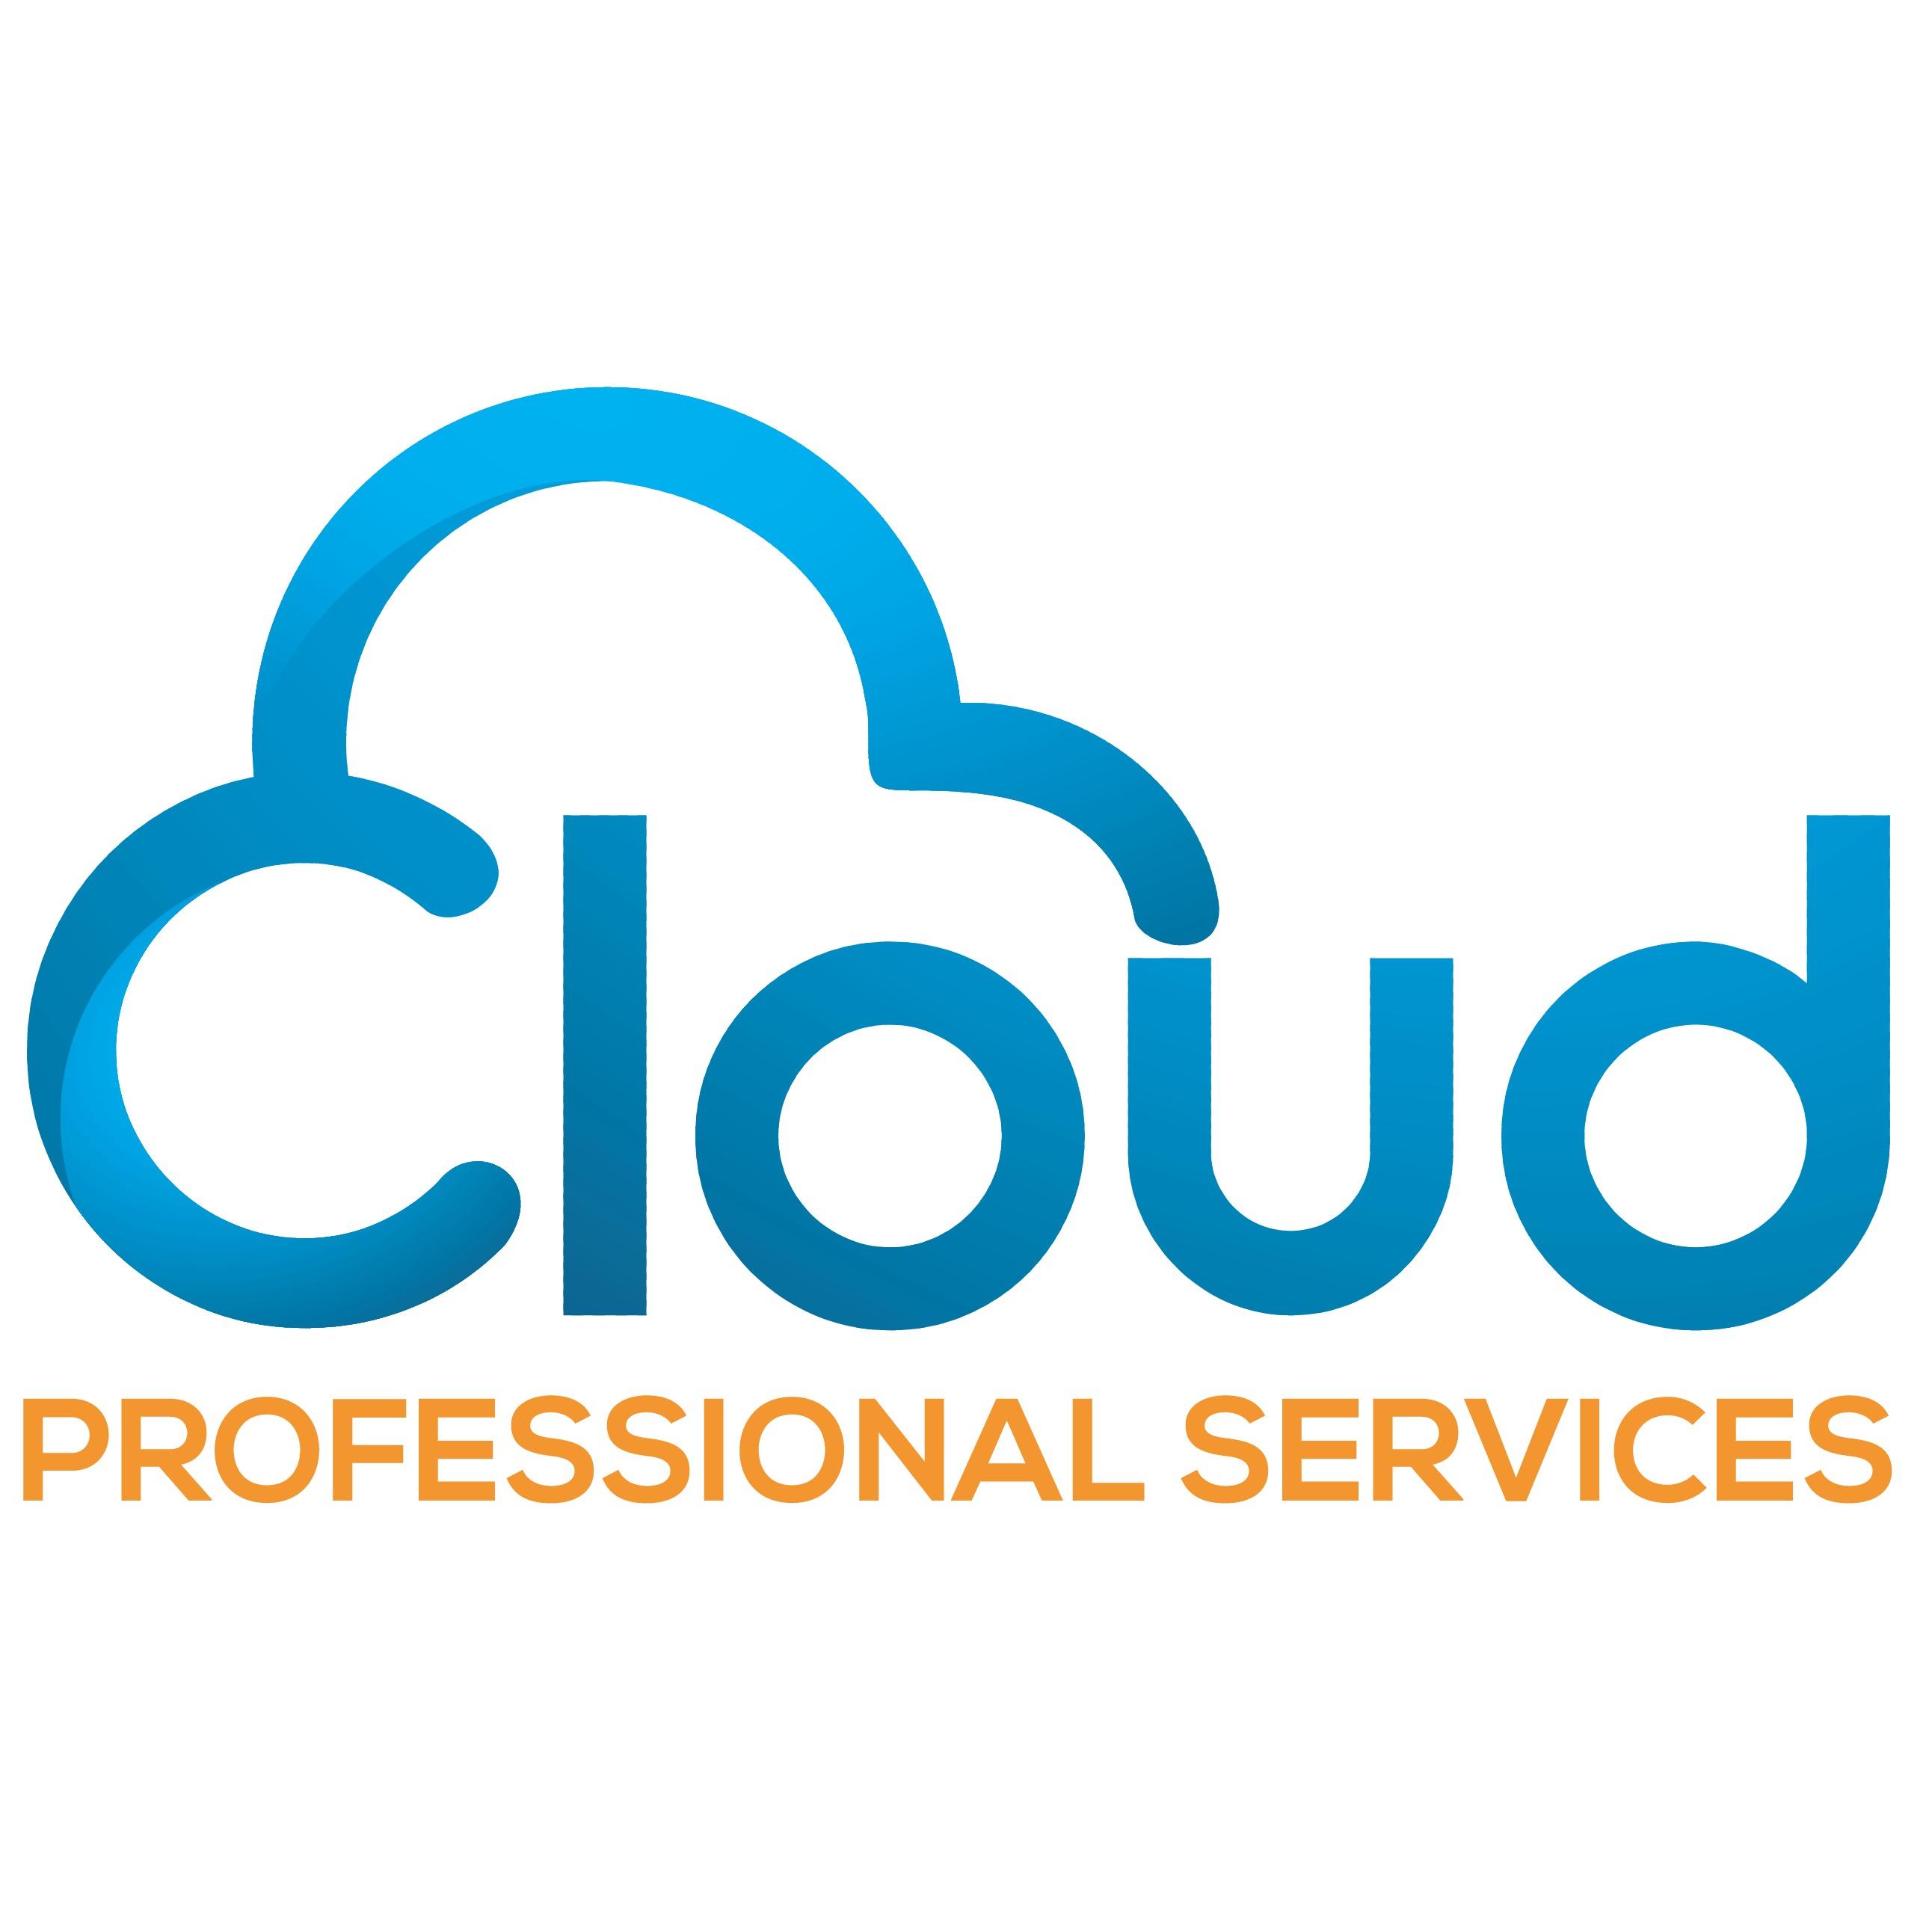 Cloud Professional Services Photo